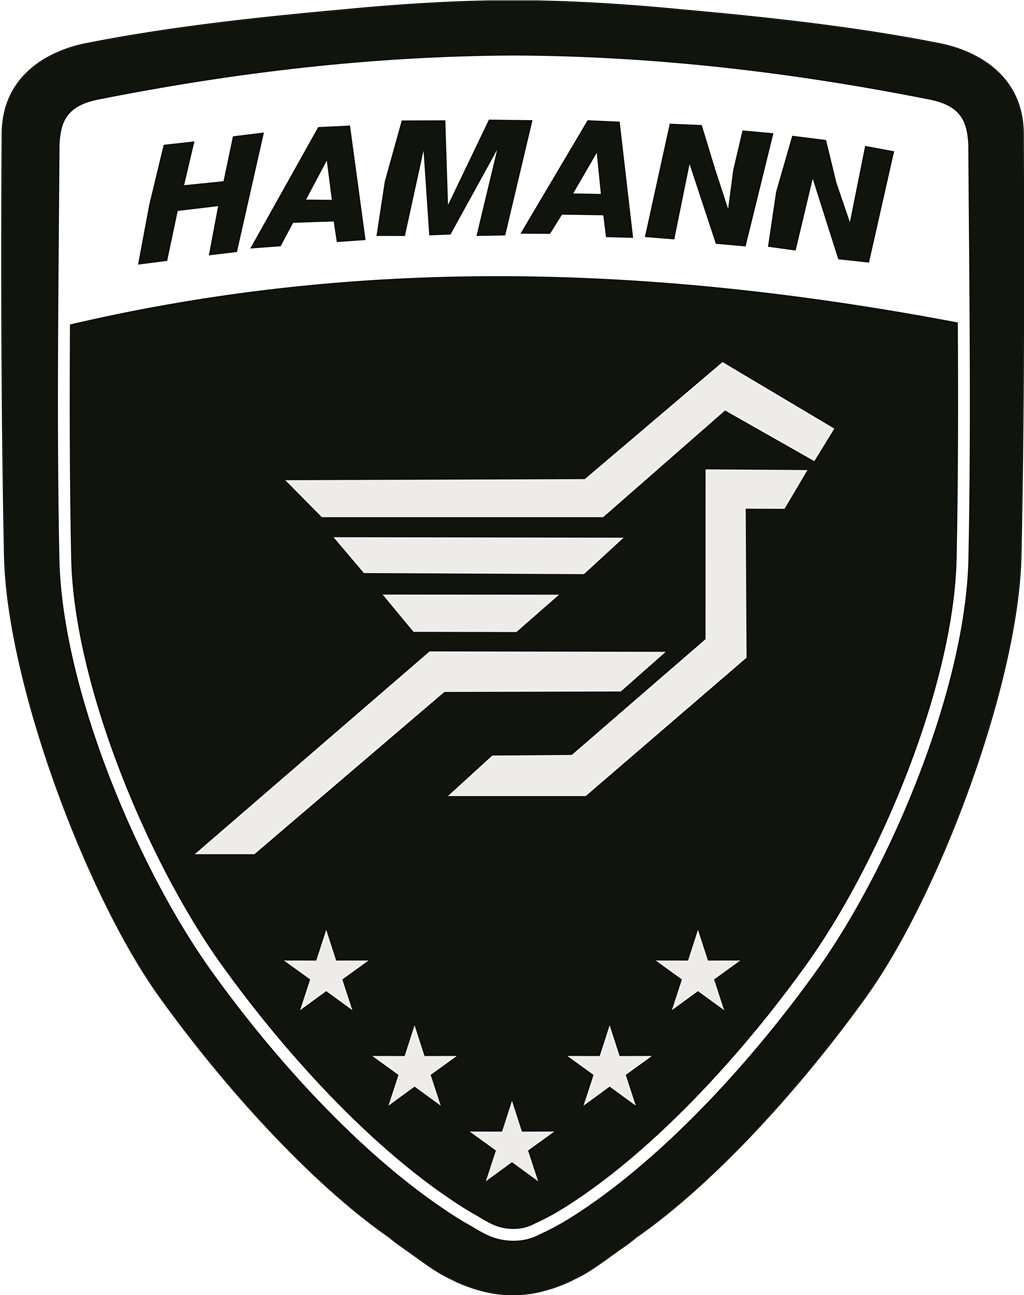 Hamann logotype, transparent .png, medium, large